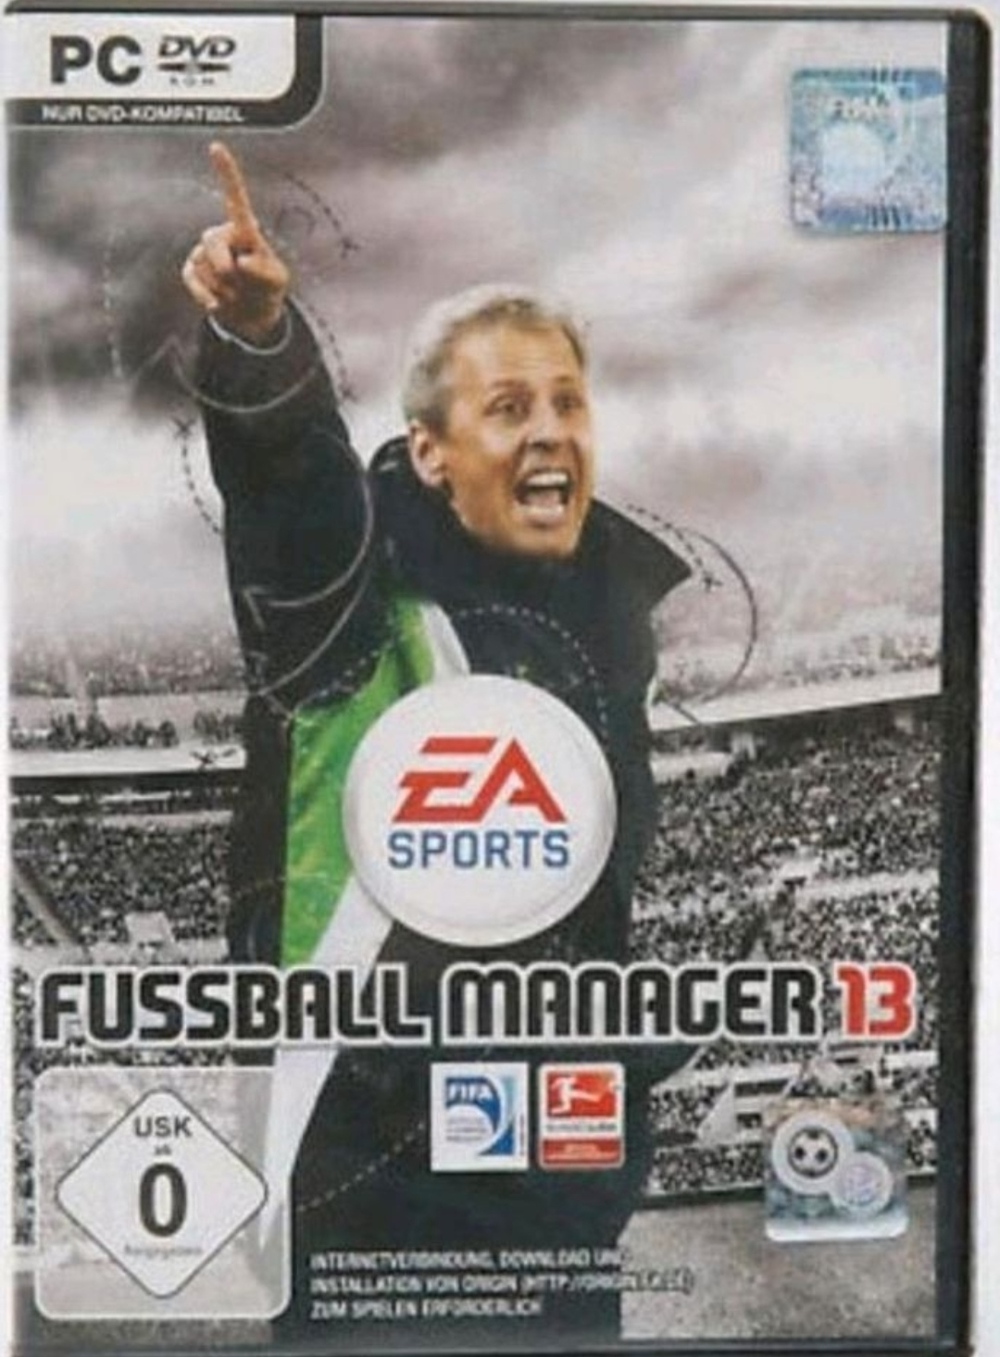 Fussball Manager 13